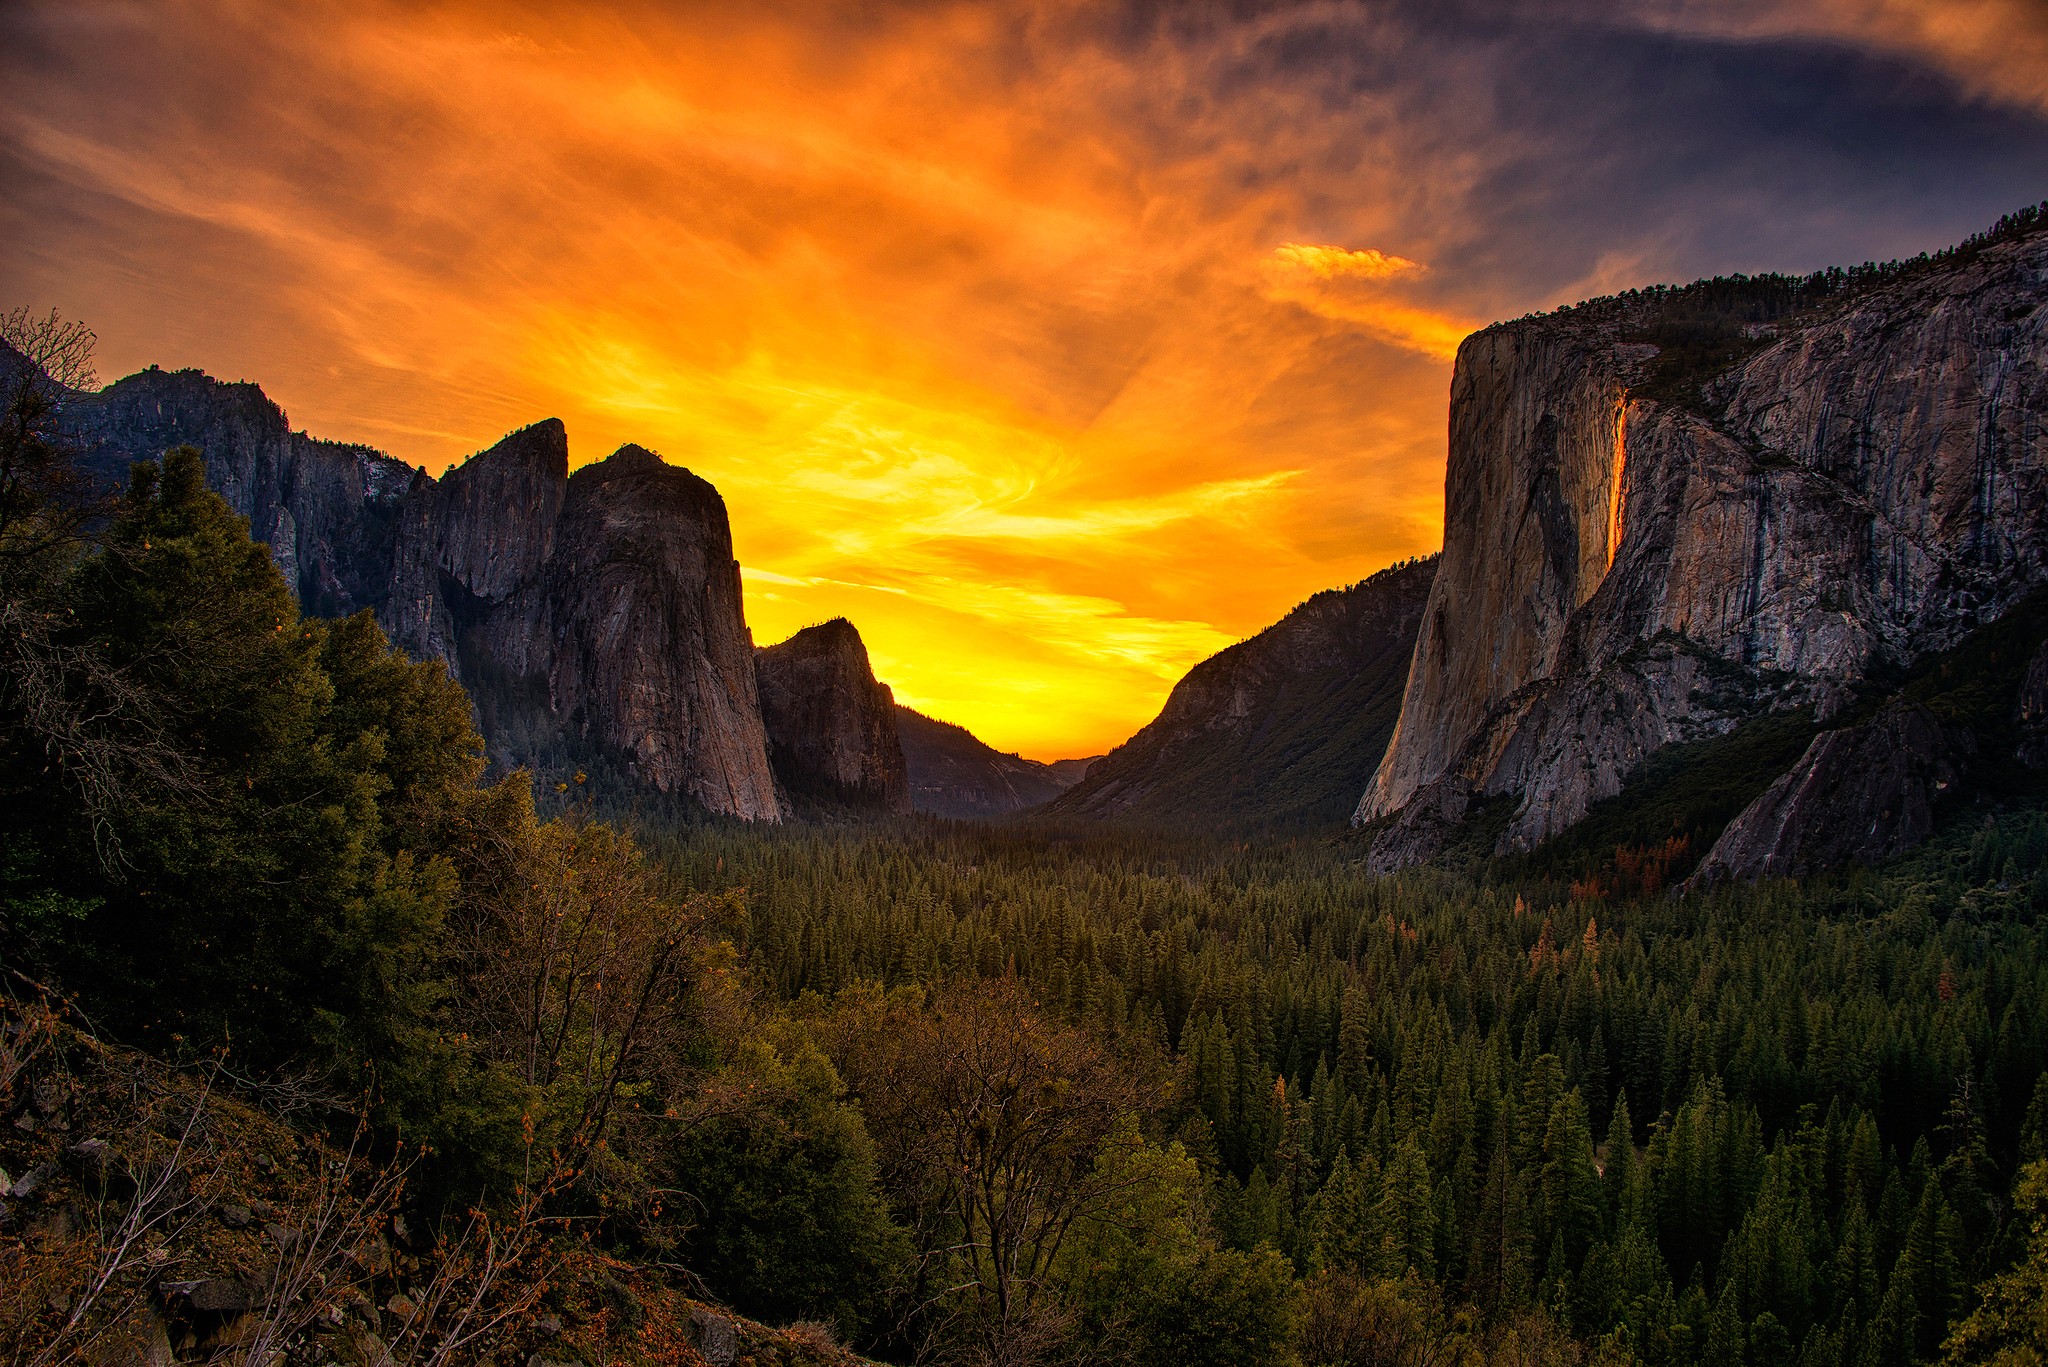 General 2048x1367 landscape Yosemite National Park sunset USA El Capitan California sky nature